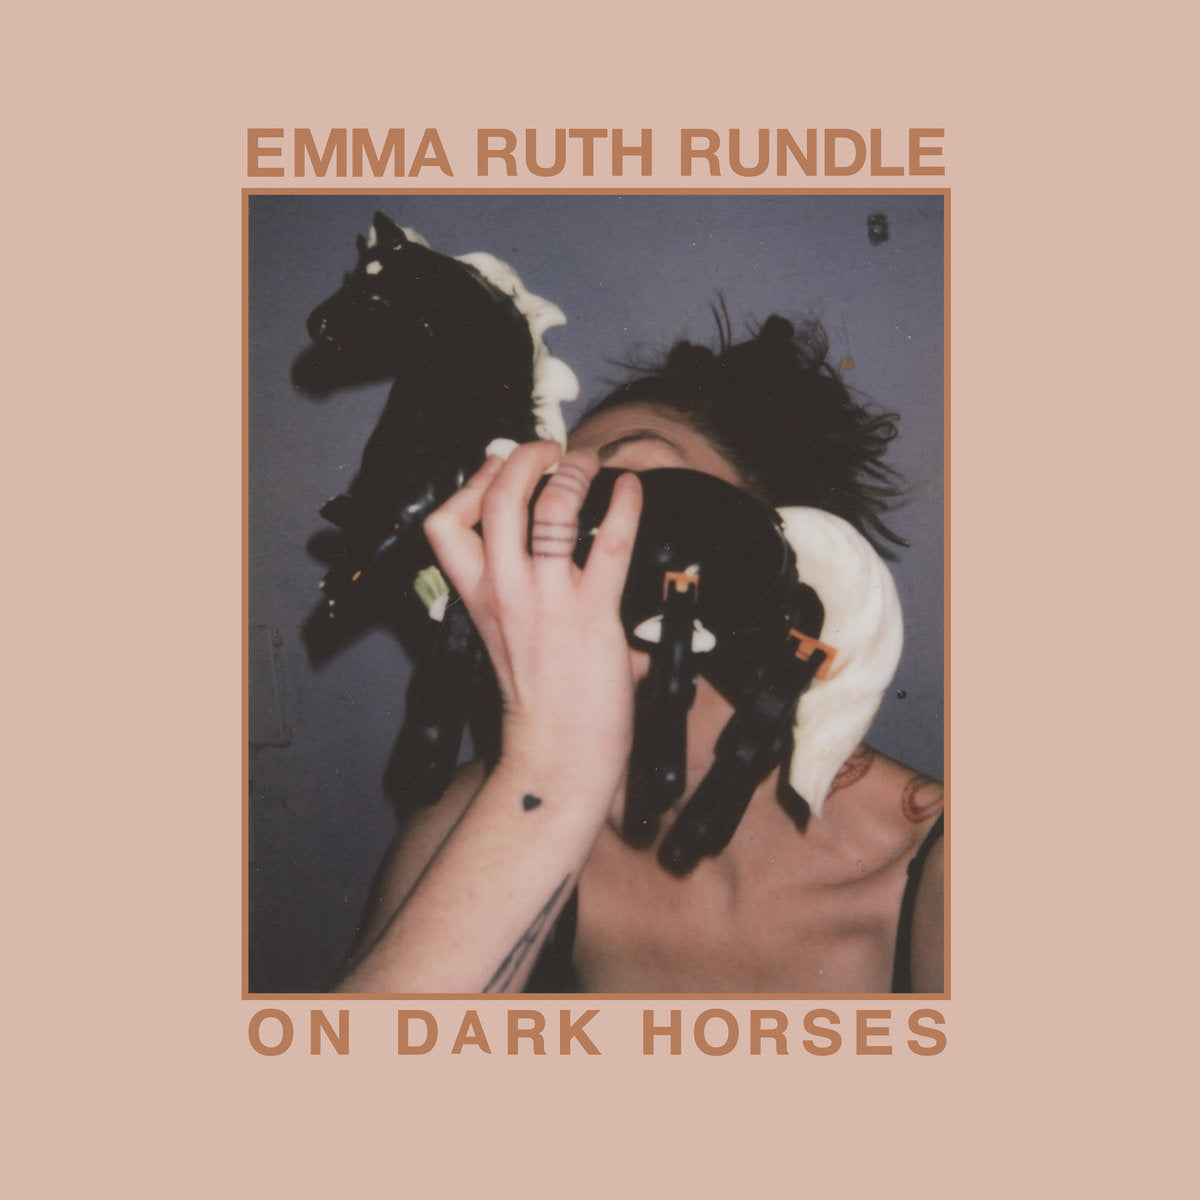 EMMA RUTH RUNDLE "On Dark Horses" CD